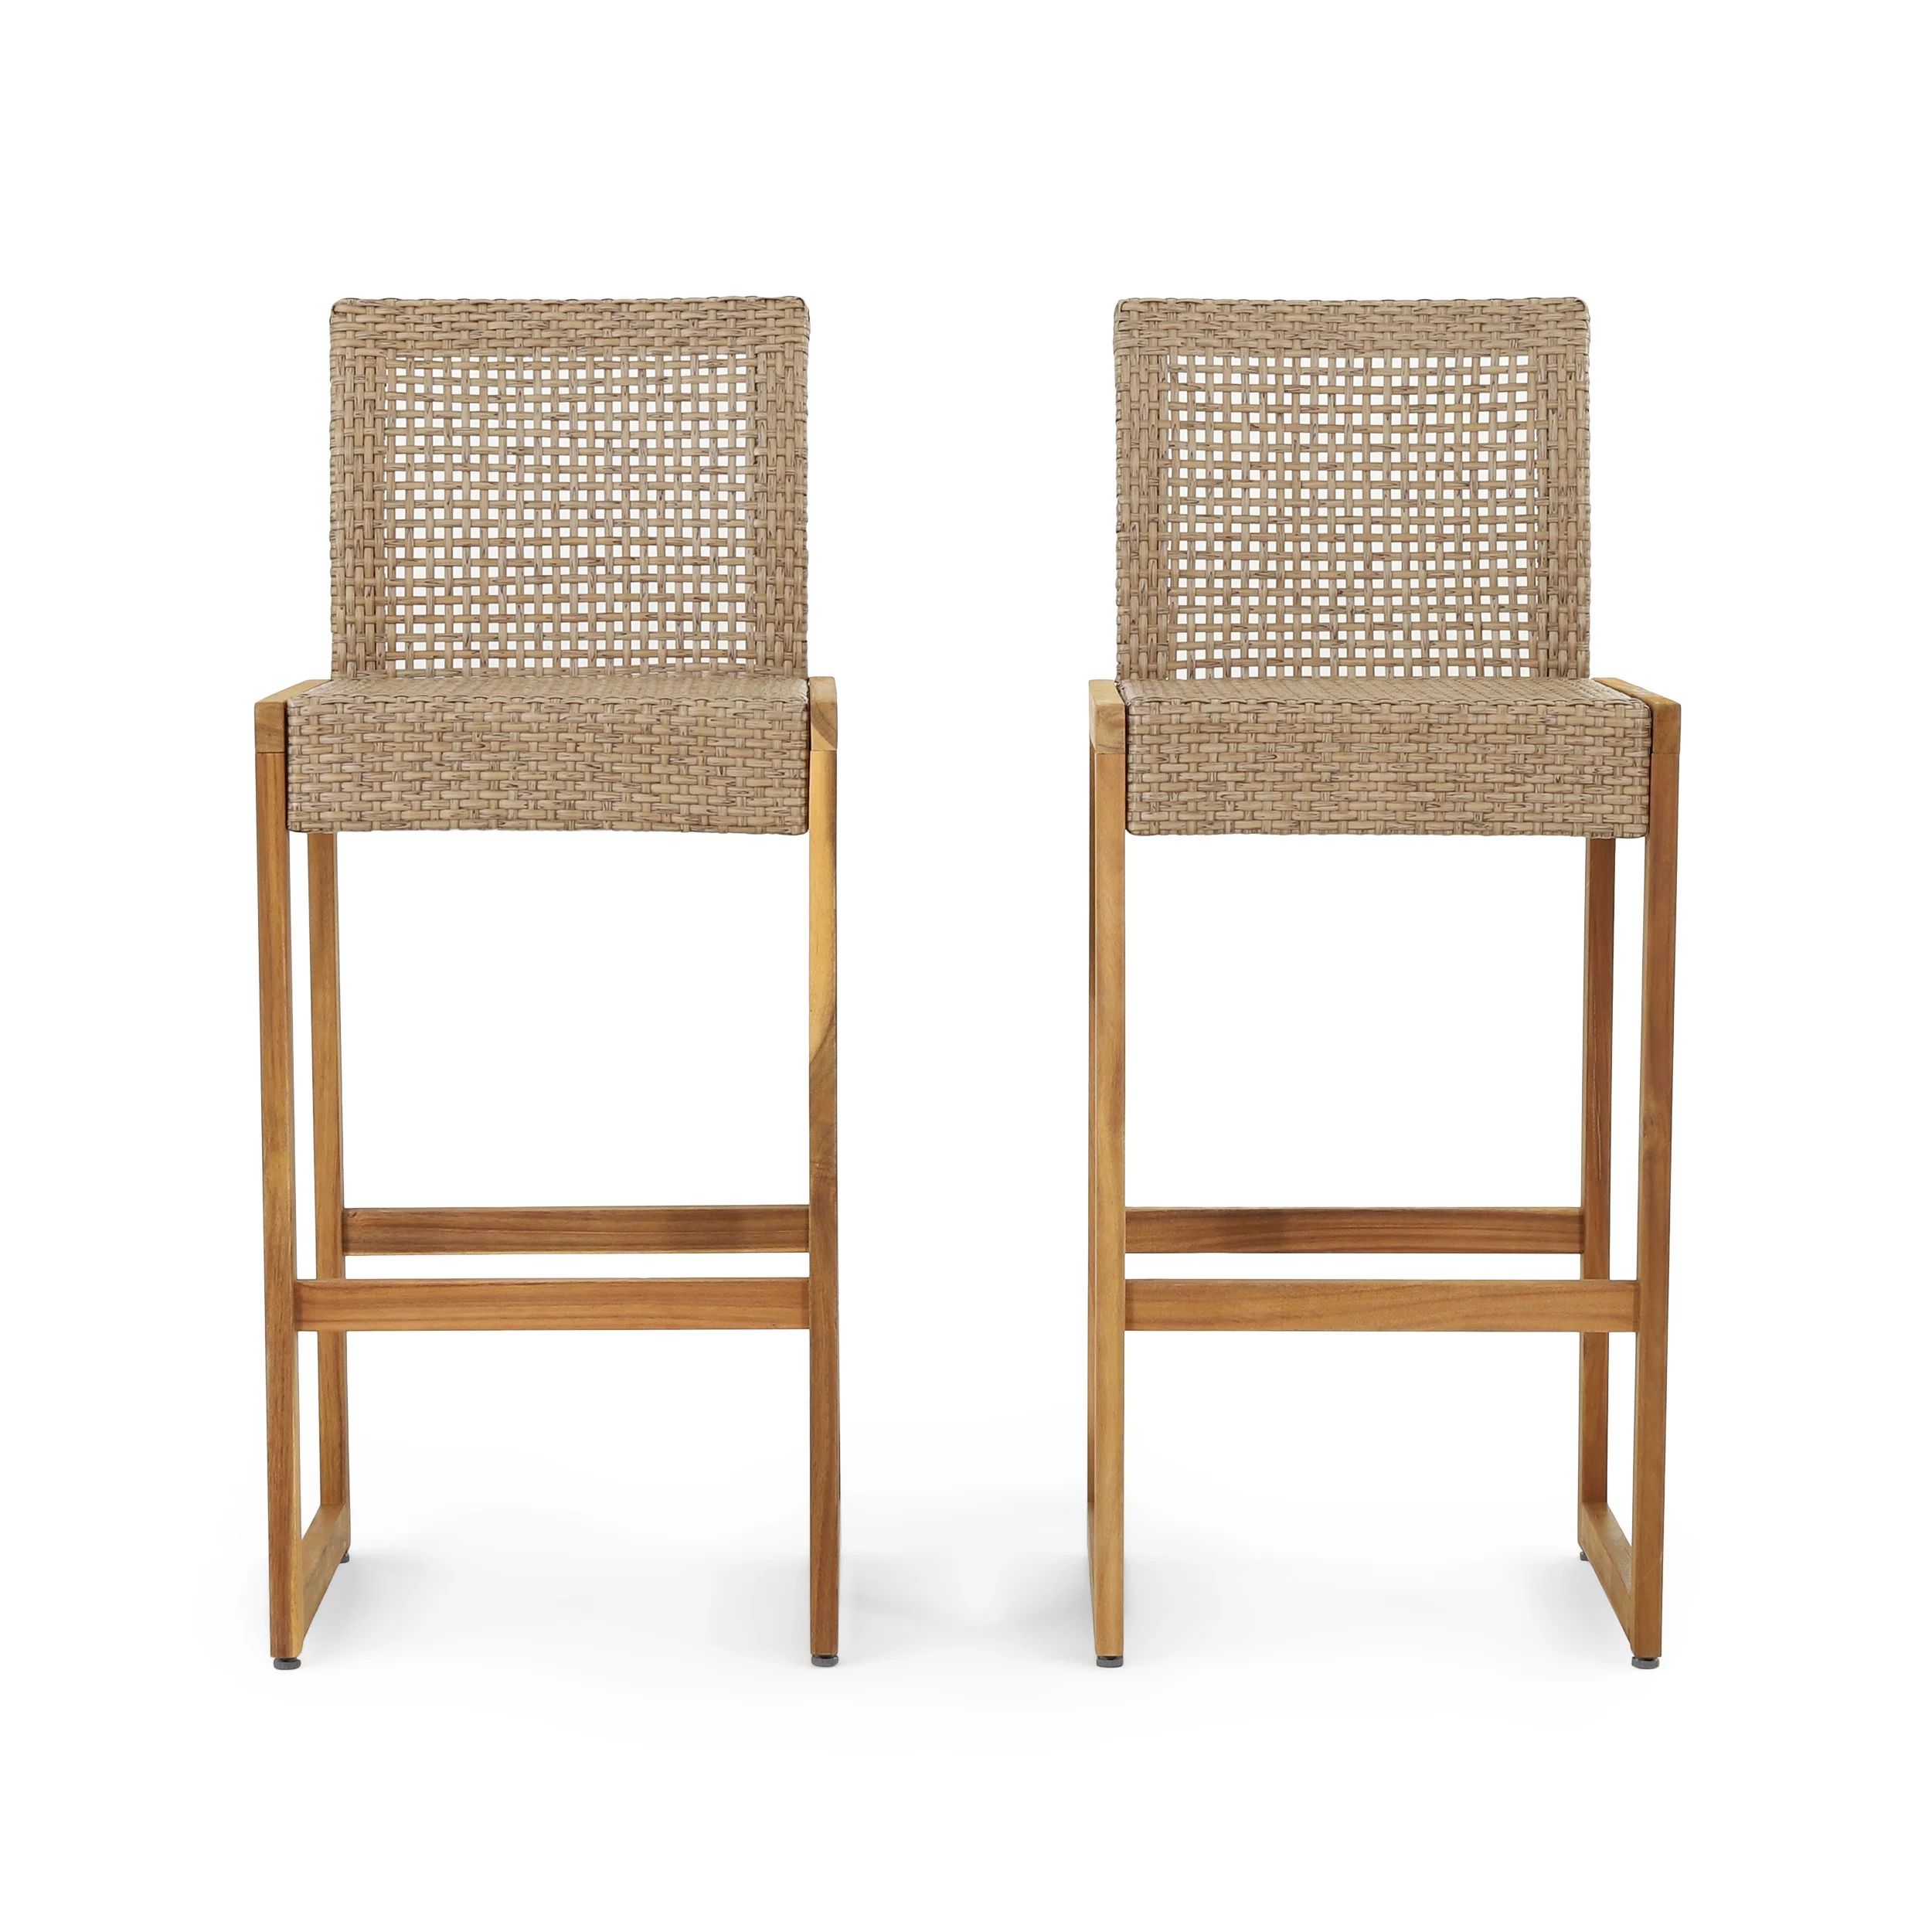 Resaca Outdoor Wicker Barstools (Set of 2), Light Multi-Brown and Teak | Walmart (US)